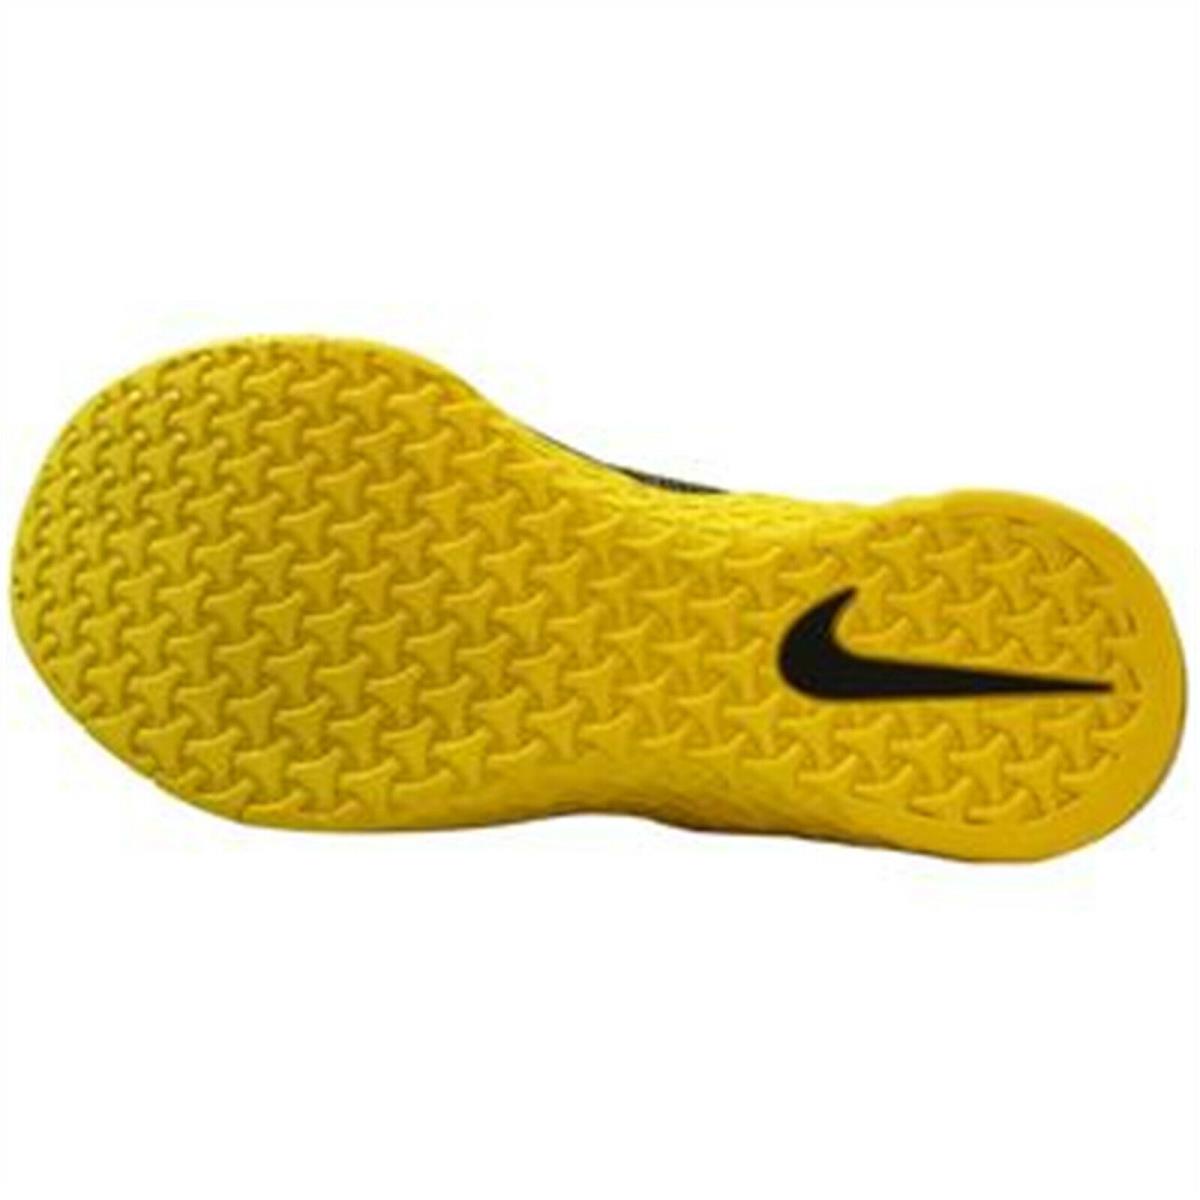 Nike shoes Metcon Flyknit - SEQUOIA / BRIGHT CITRON 5